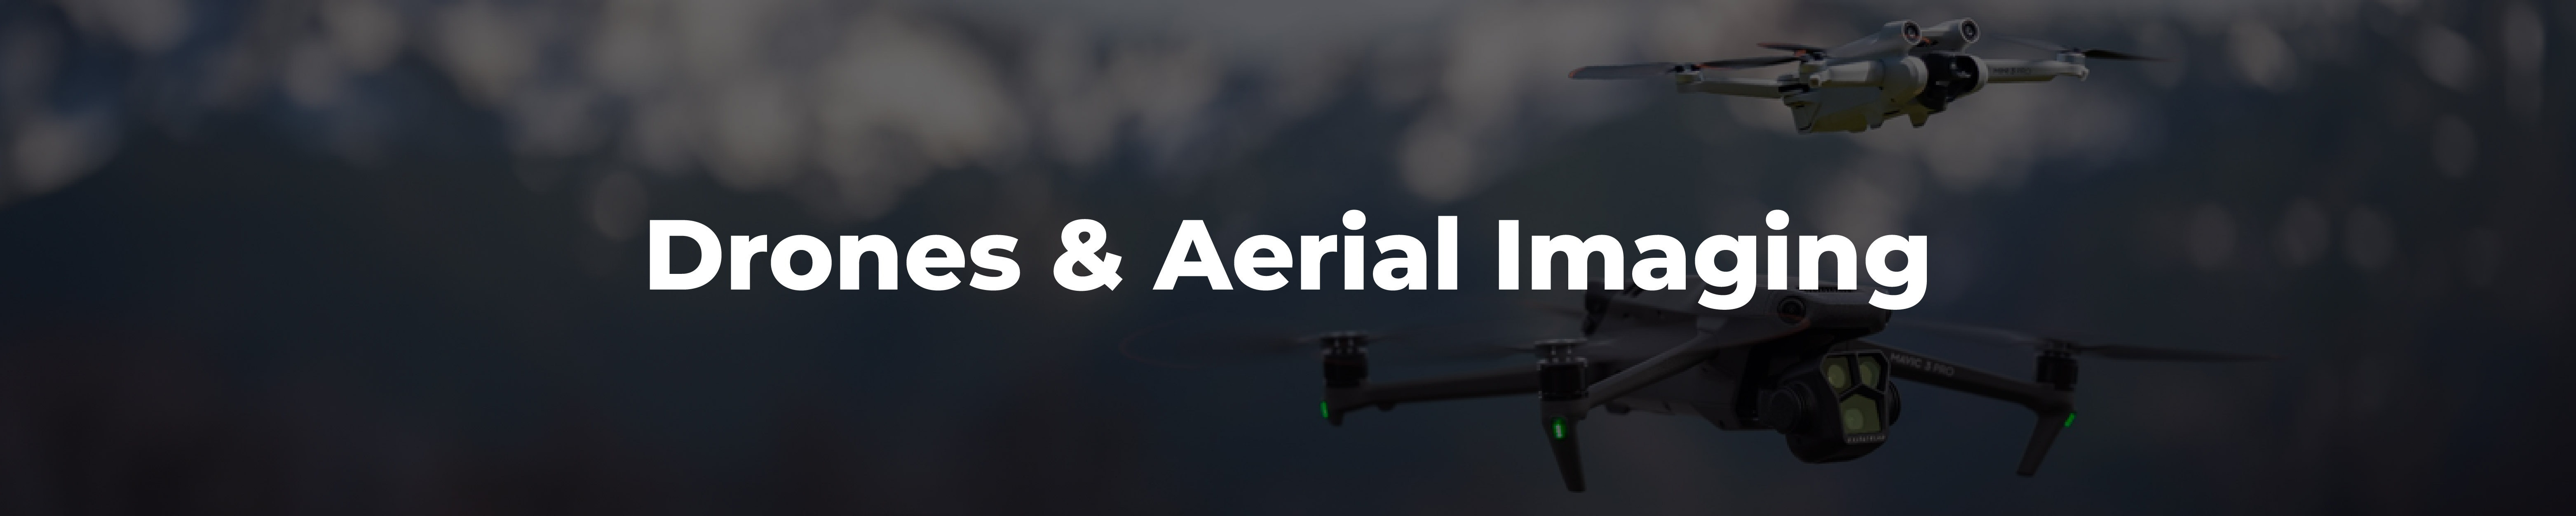 Drones & Aerial Imaging 